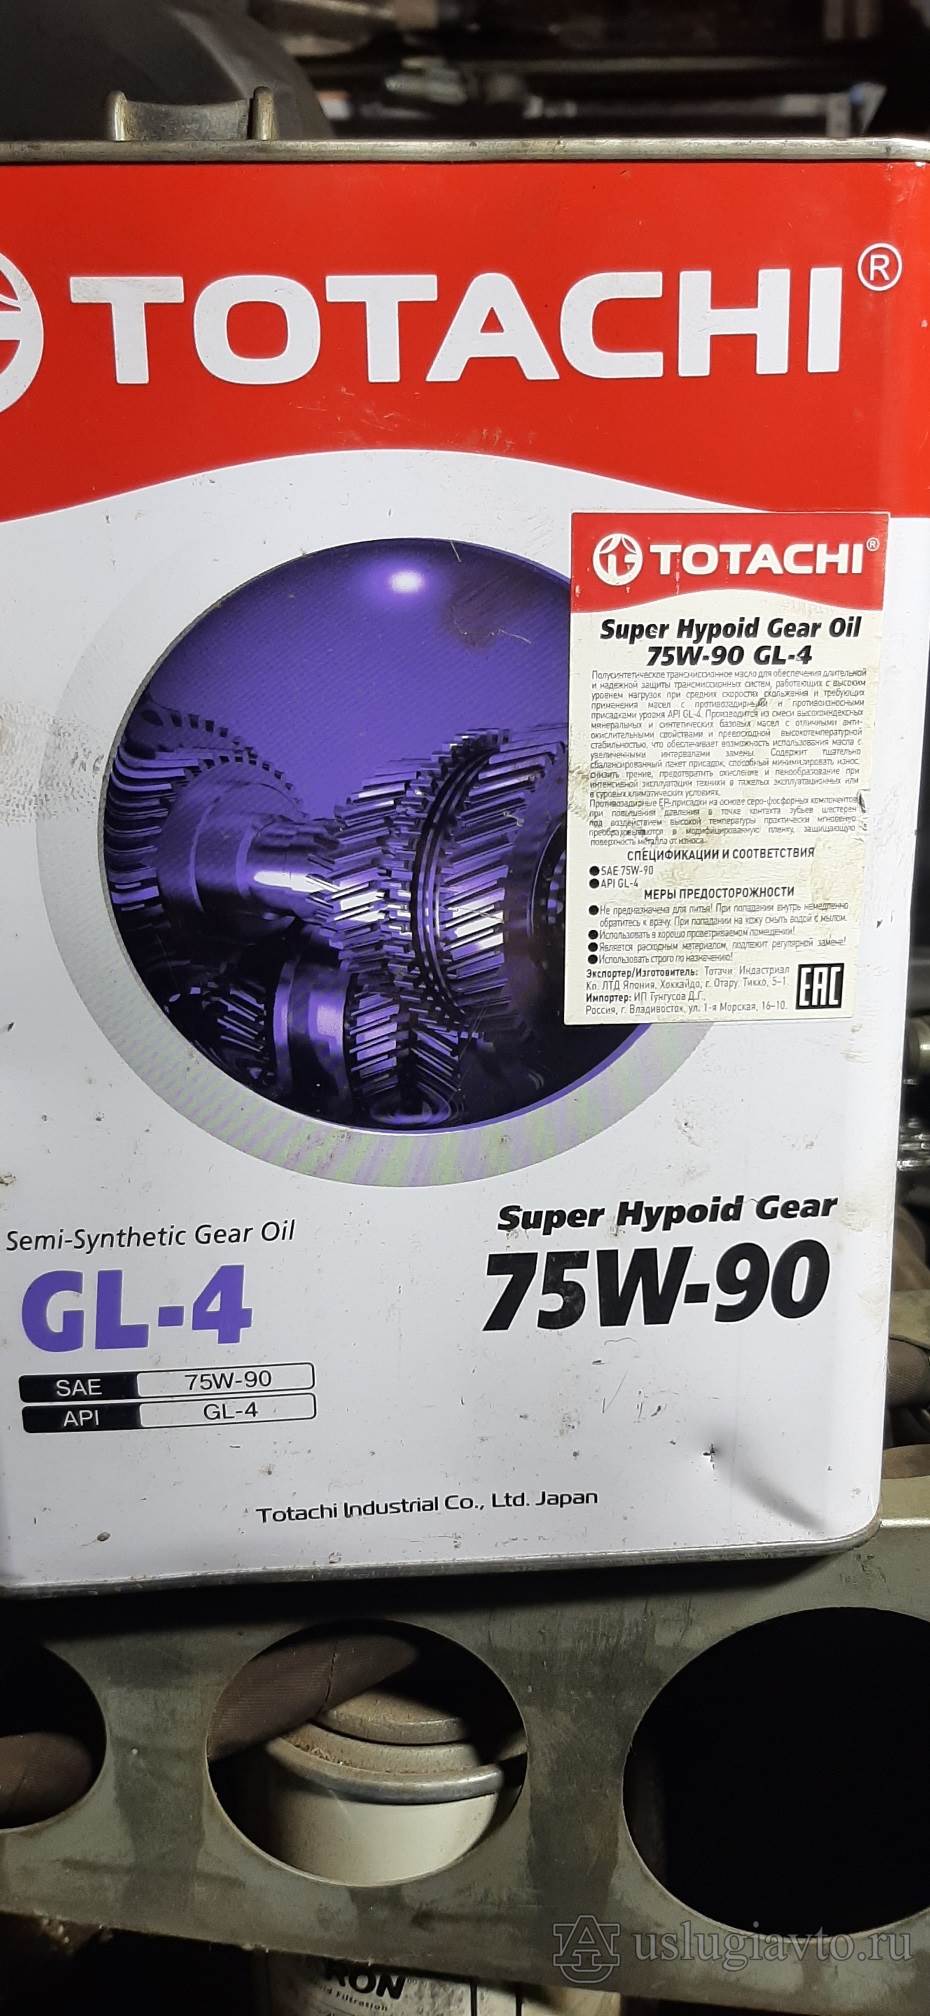 Totachi Super Hypoid Gear Oil 75w-90 GL-4